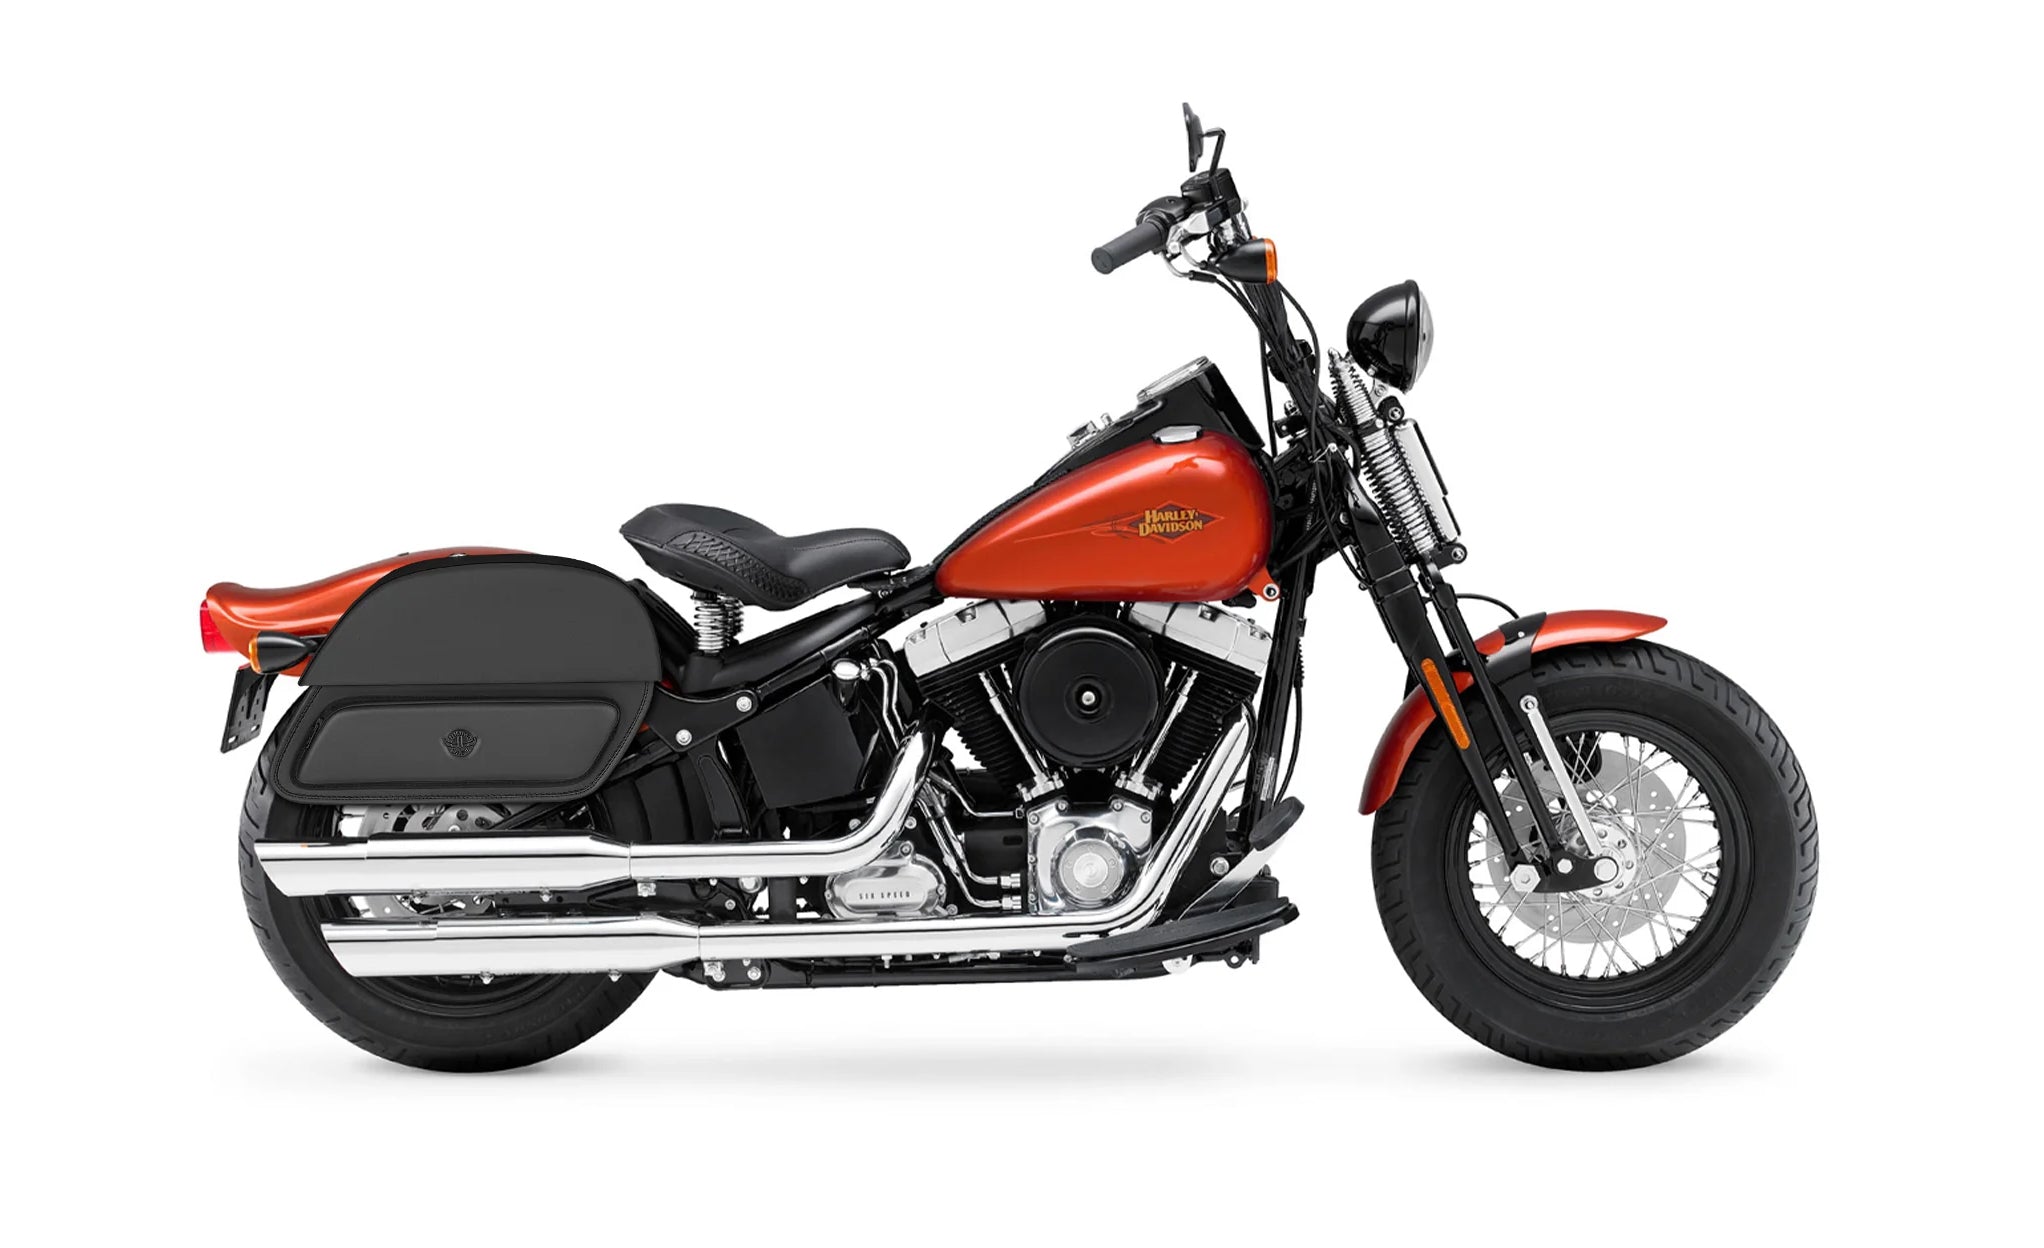 28L - Pantheon Medium Motorcycle Saddlebags for Harley Softail Cross Bones FLSTSB on Bike Photo @expand